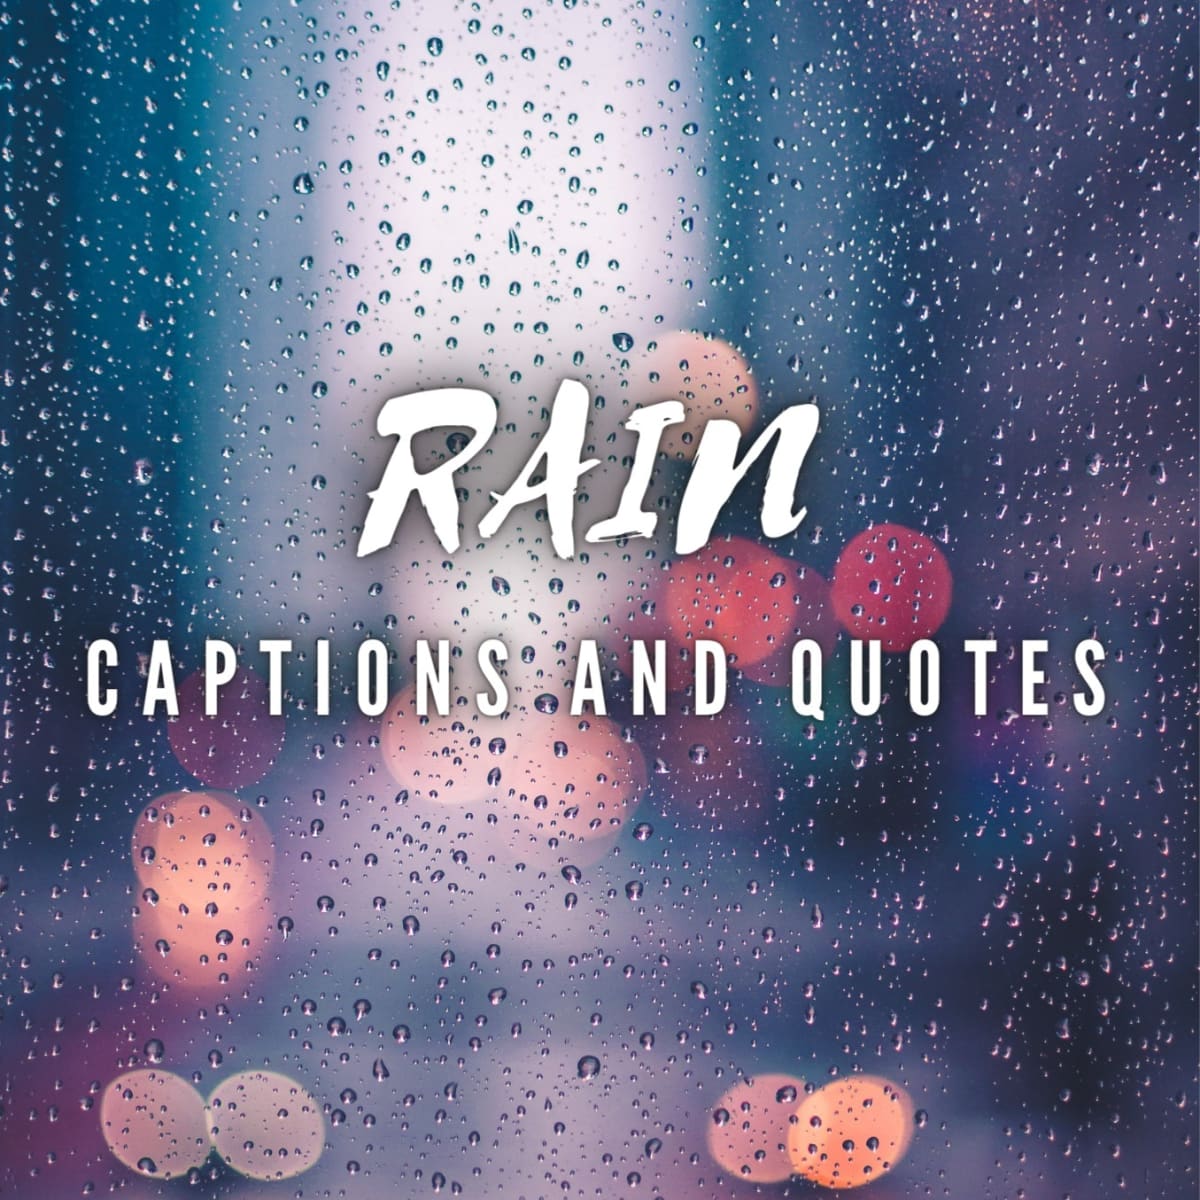 150+ Rain Quotes and Caption Ideas for Instagram - TurboFuture